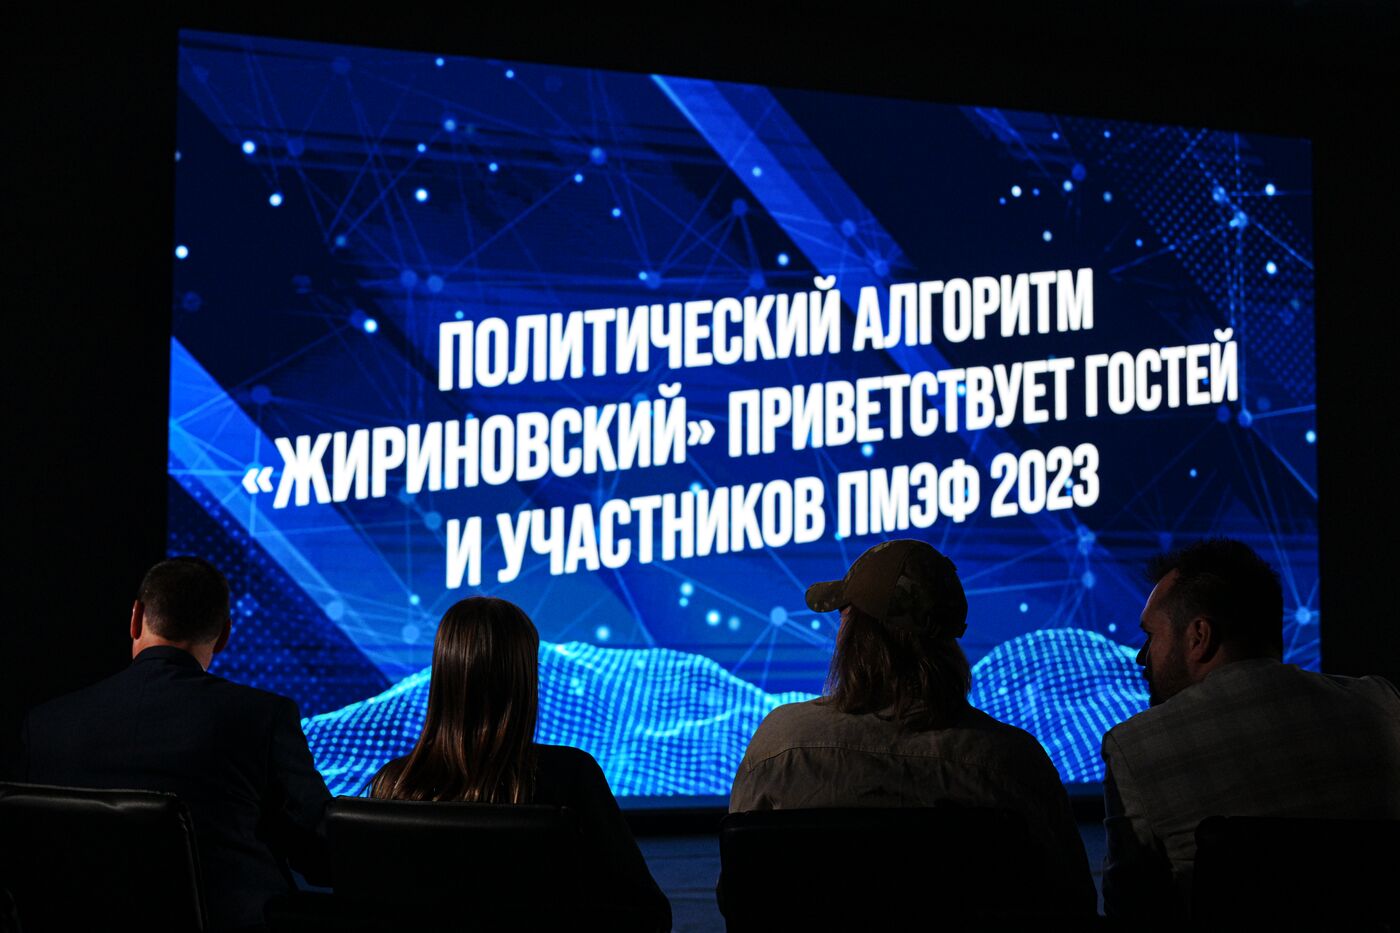 SPIEF-2023. Presentation of Zhirinovsky neural network